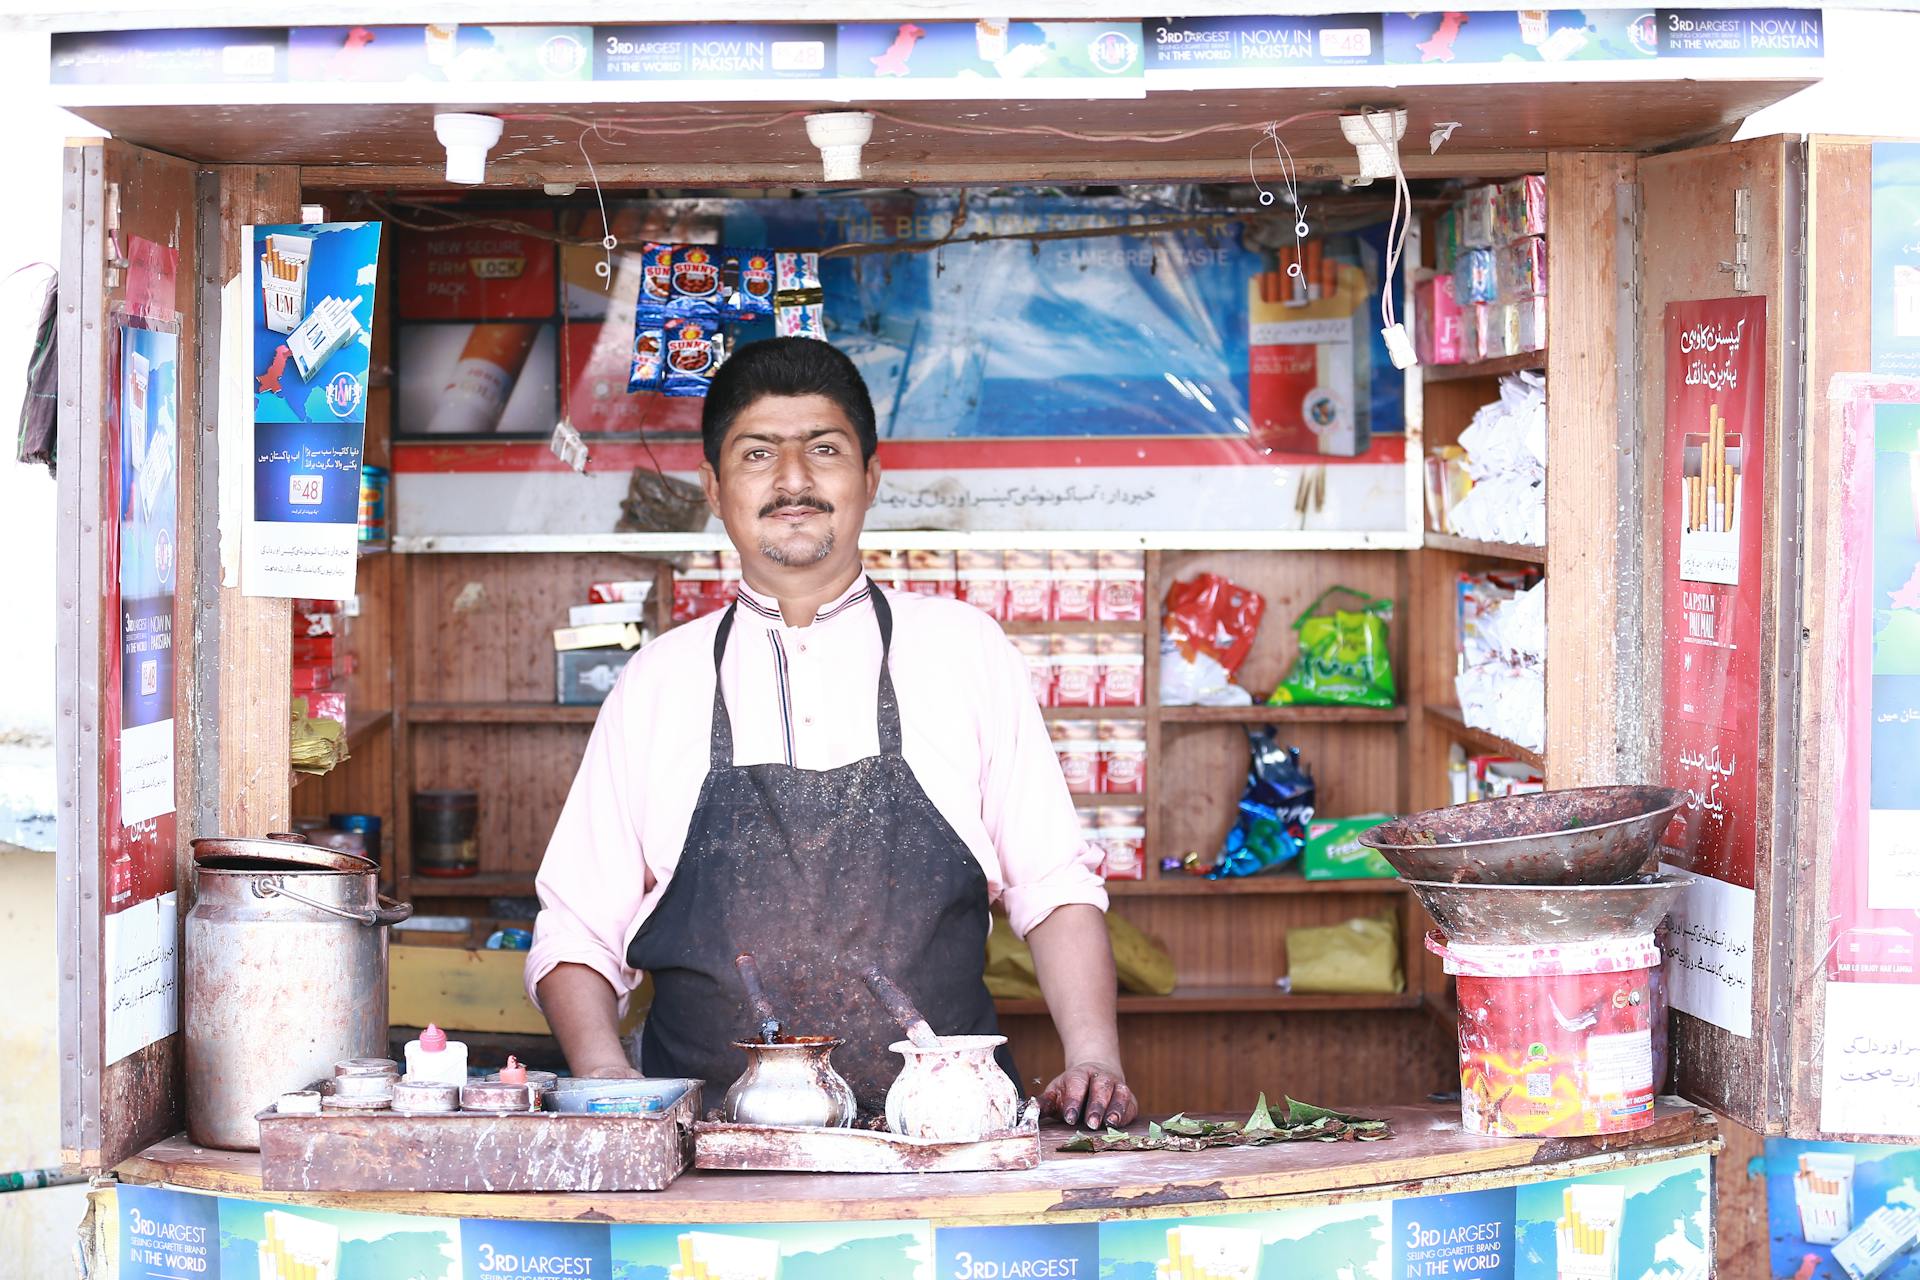 Photograph of a Vendor with an Apron